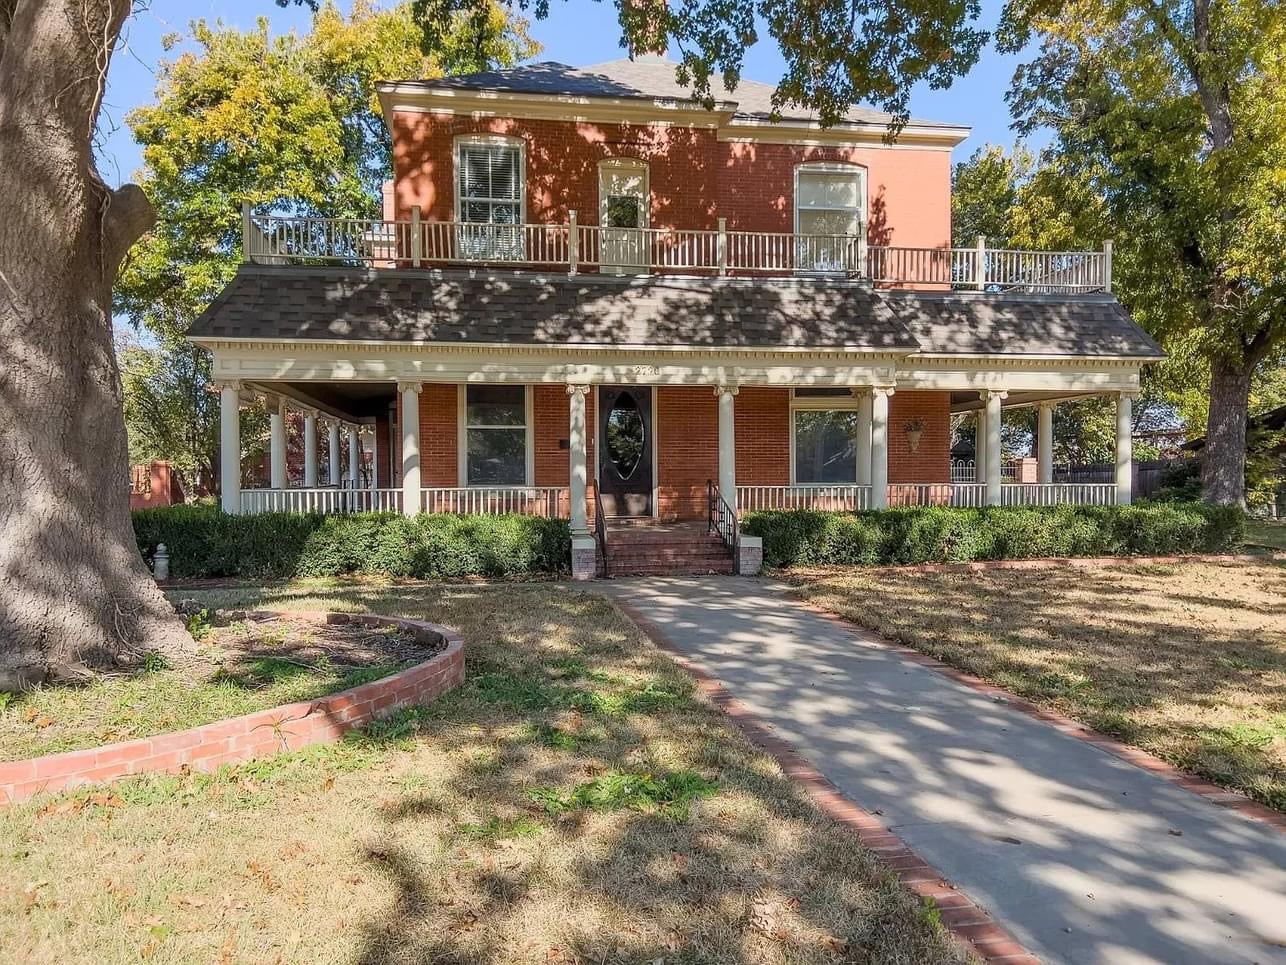 1890 Waggoner-Hicks House For Sale In Vernon Texas